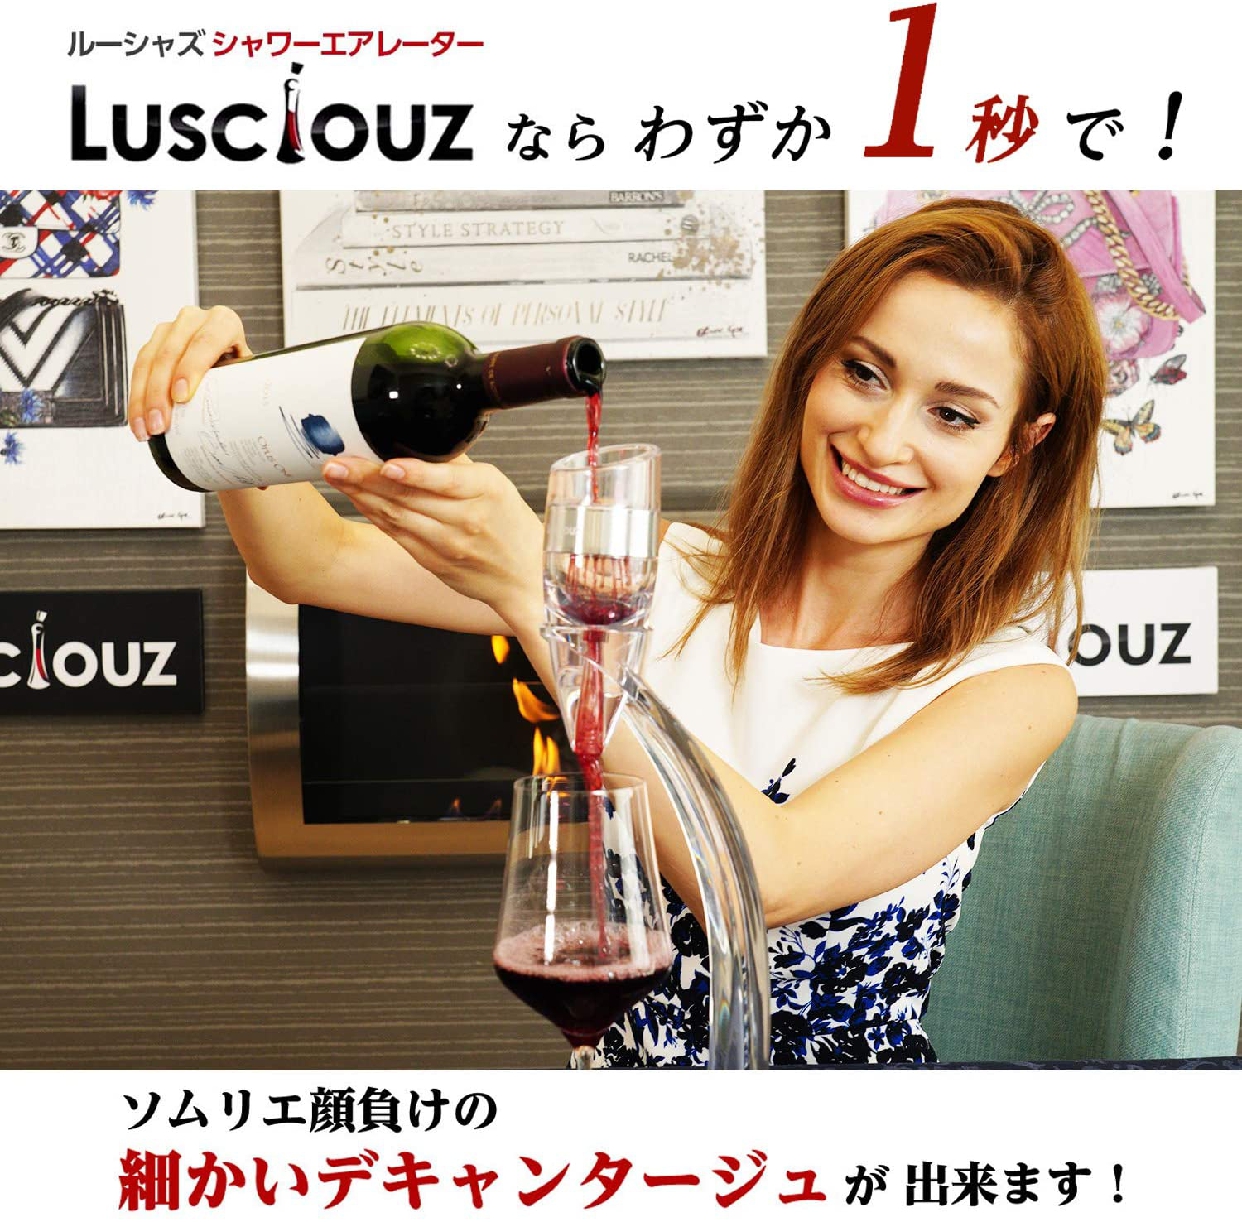 Lusciouz(ルーシャズ) シャワーエアレーターの商品画像5 